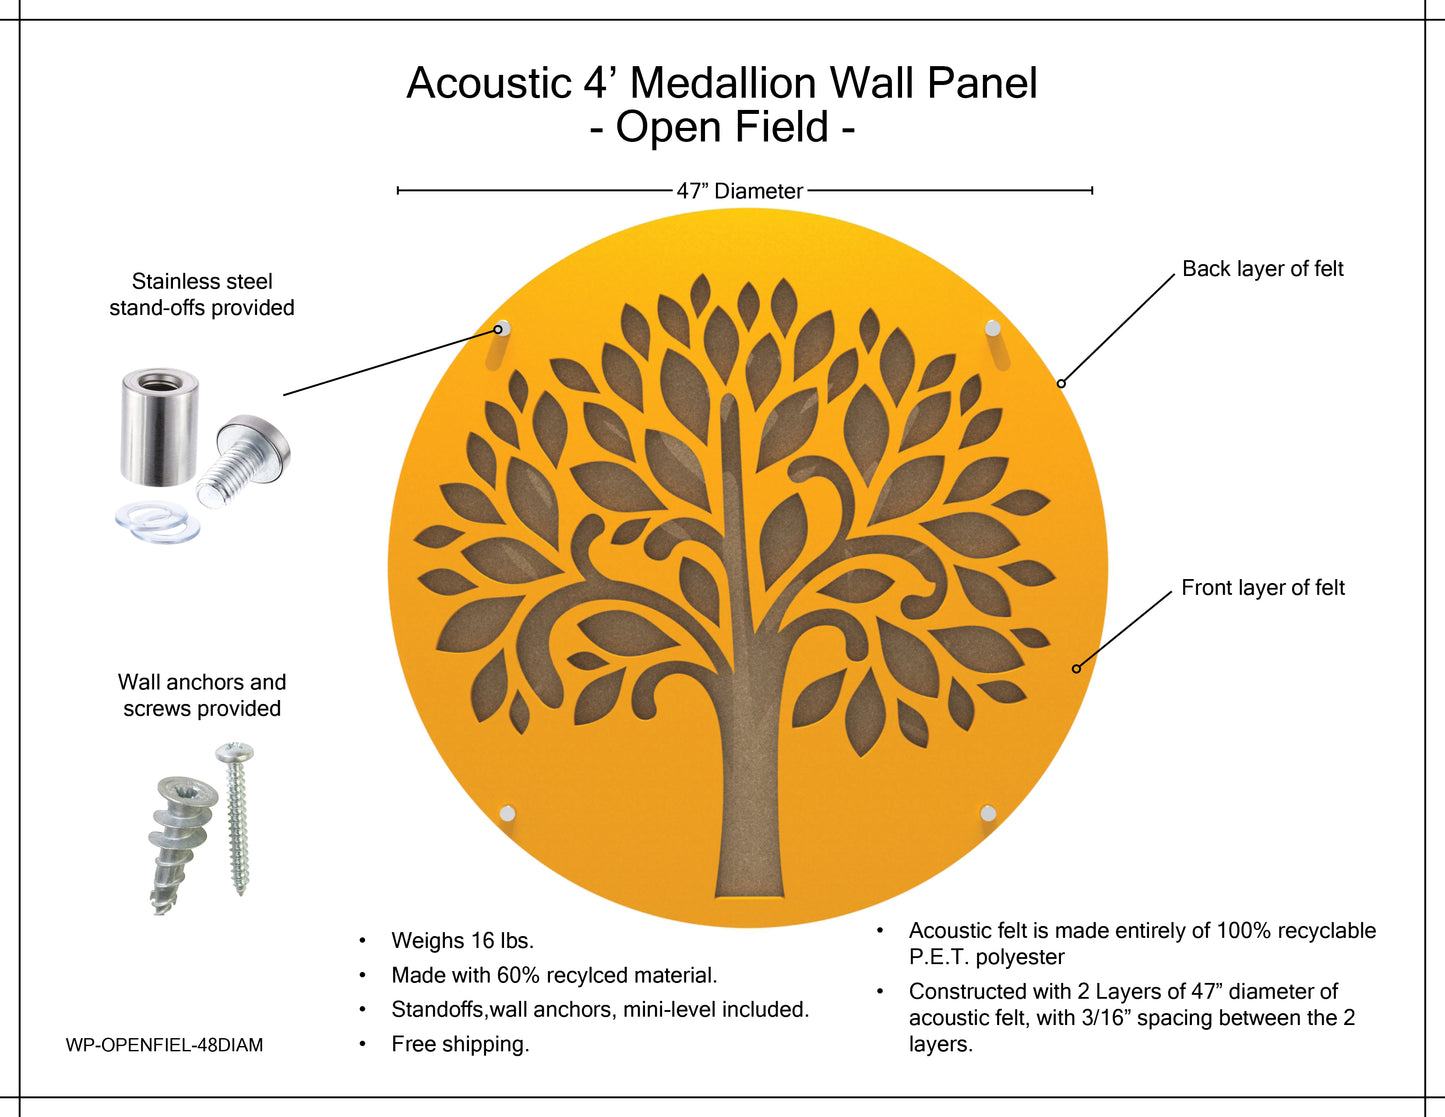 Medallion Acoustic Wall Panel - Open Field